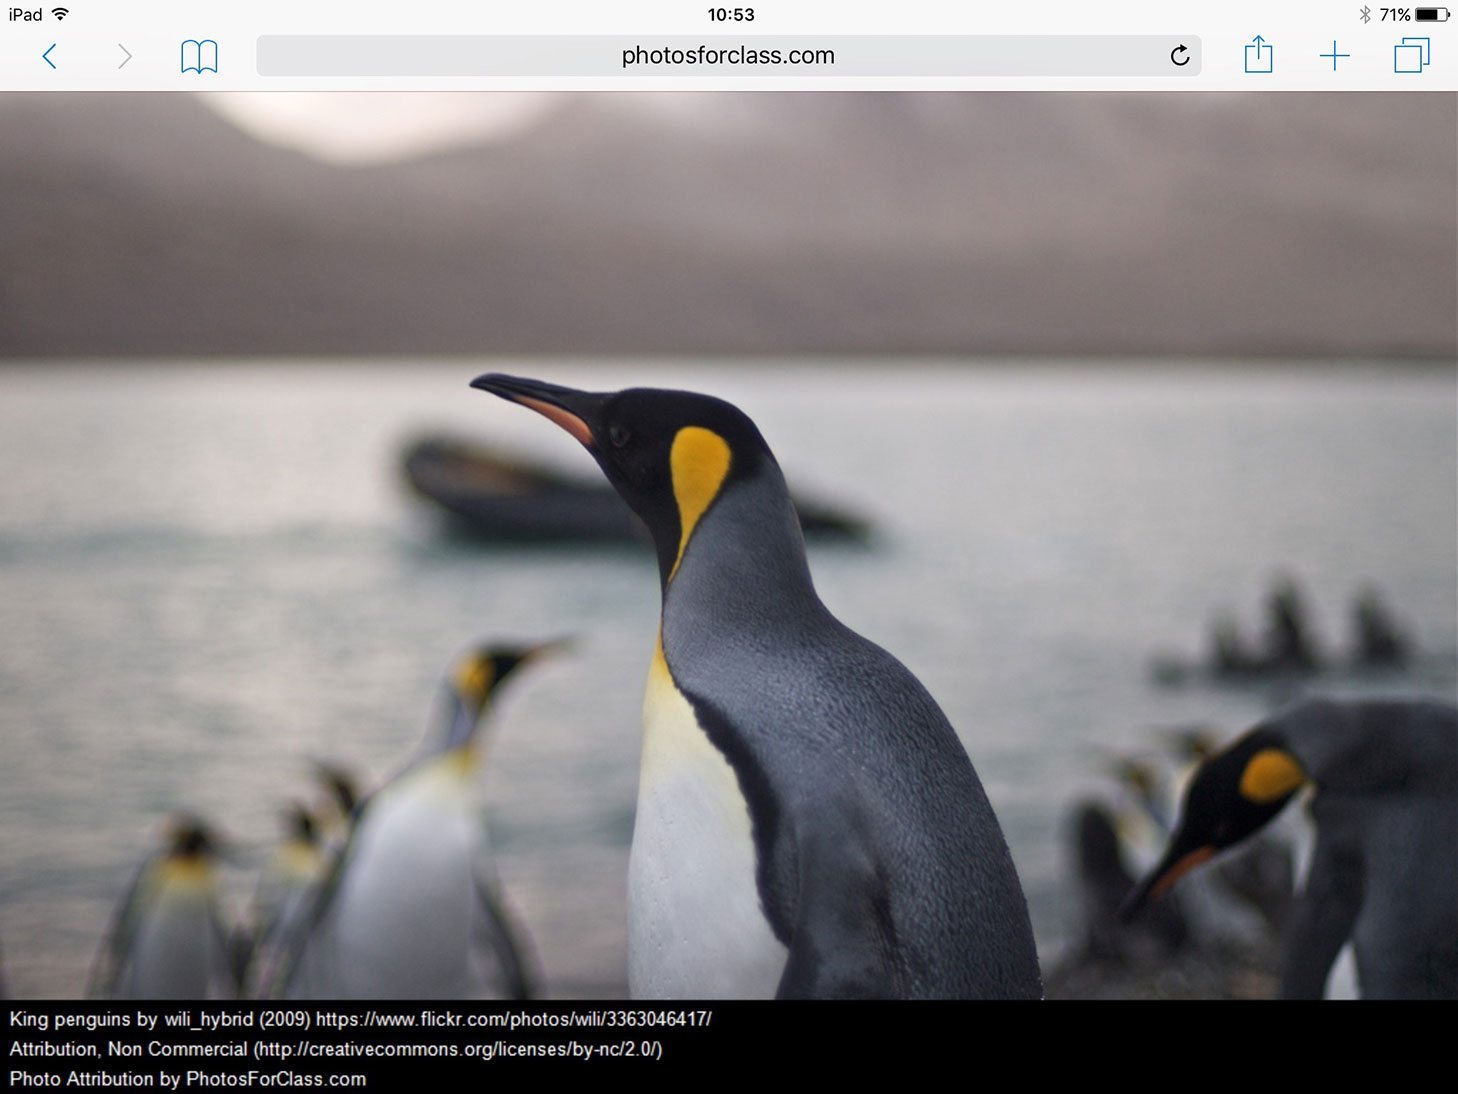 Penguin image found via Photos For Class on iPad